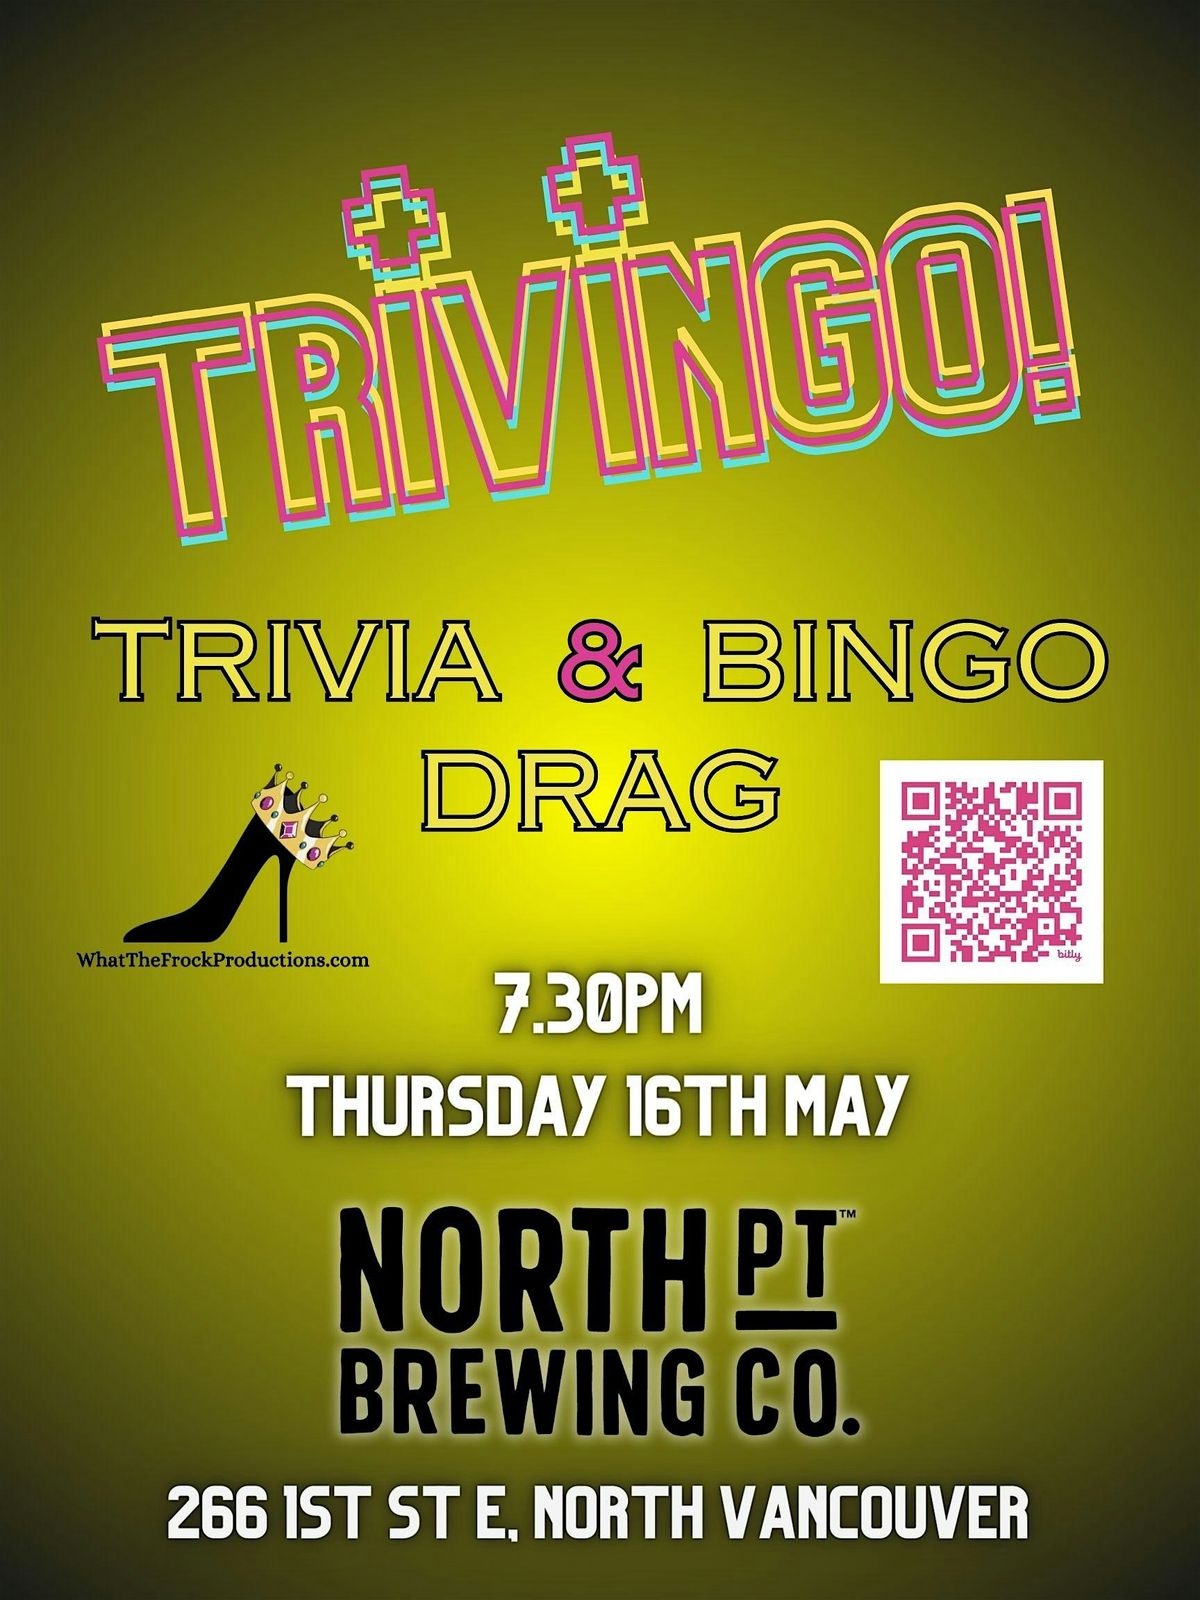 TRIVINGO! Trivia, Bingo and Drag on the North Shore